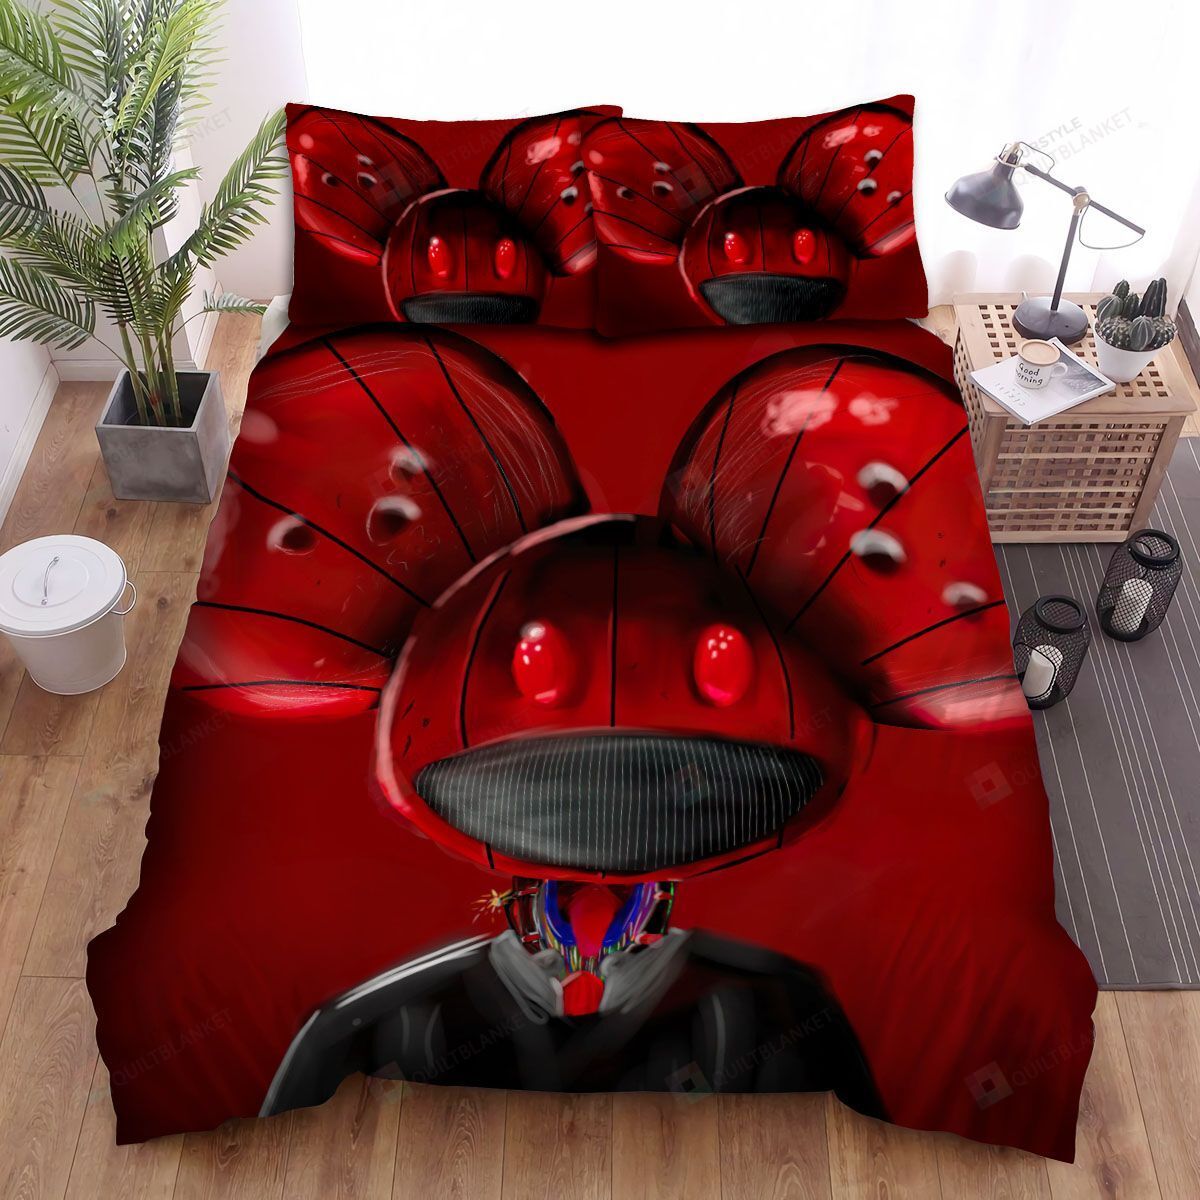 Deadmau5 Red Bed Sheets Spread Comforter Duvet Cover Bedding Sets